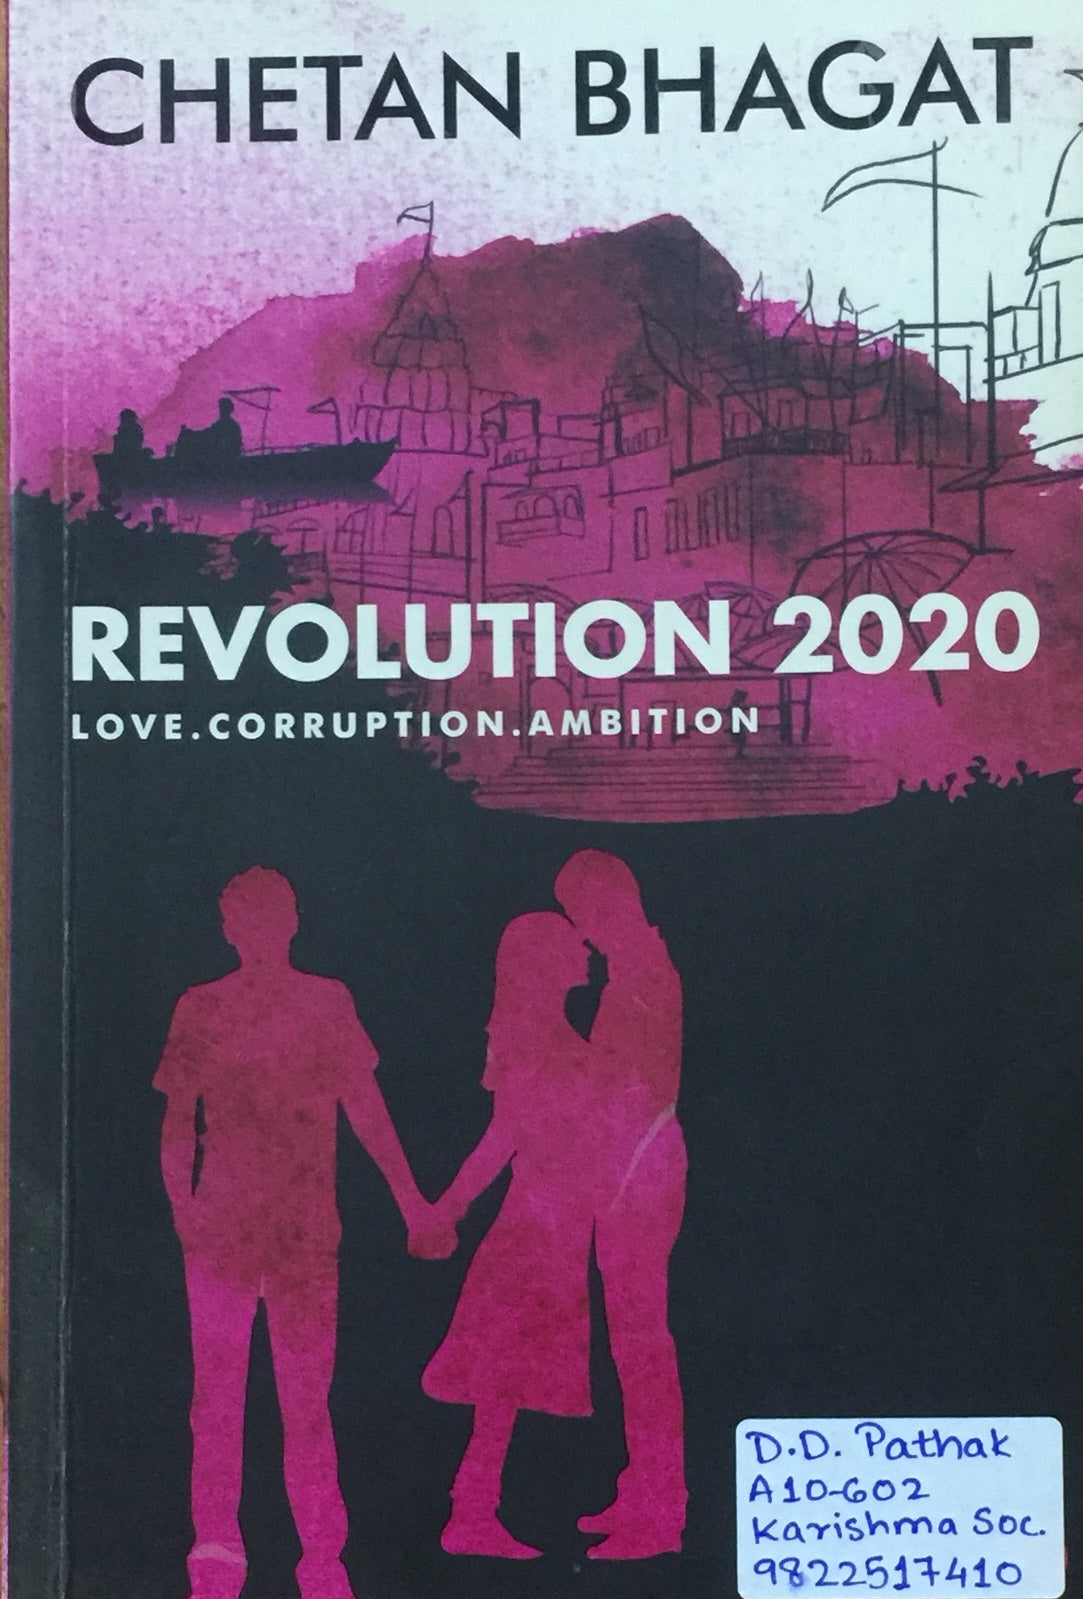 Revolution 2020 by Chetan Bhagat  Half Price Books India Books inspire-bookspace.myshopify.com Half Price Books India